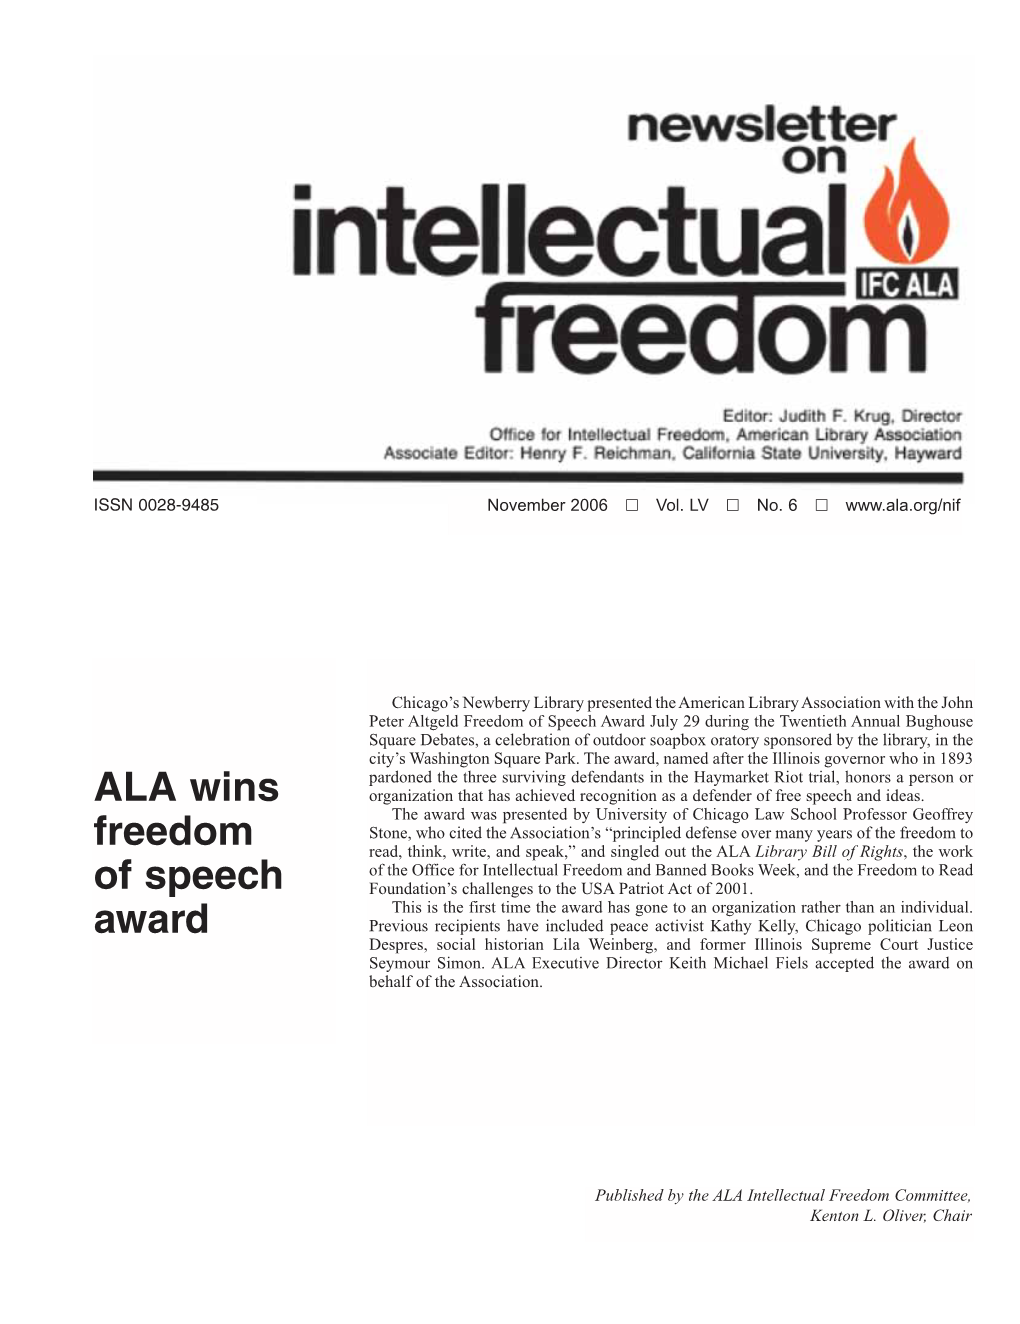 ALA Wins Freedom of Speech Award